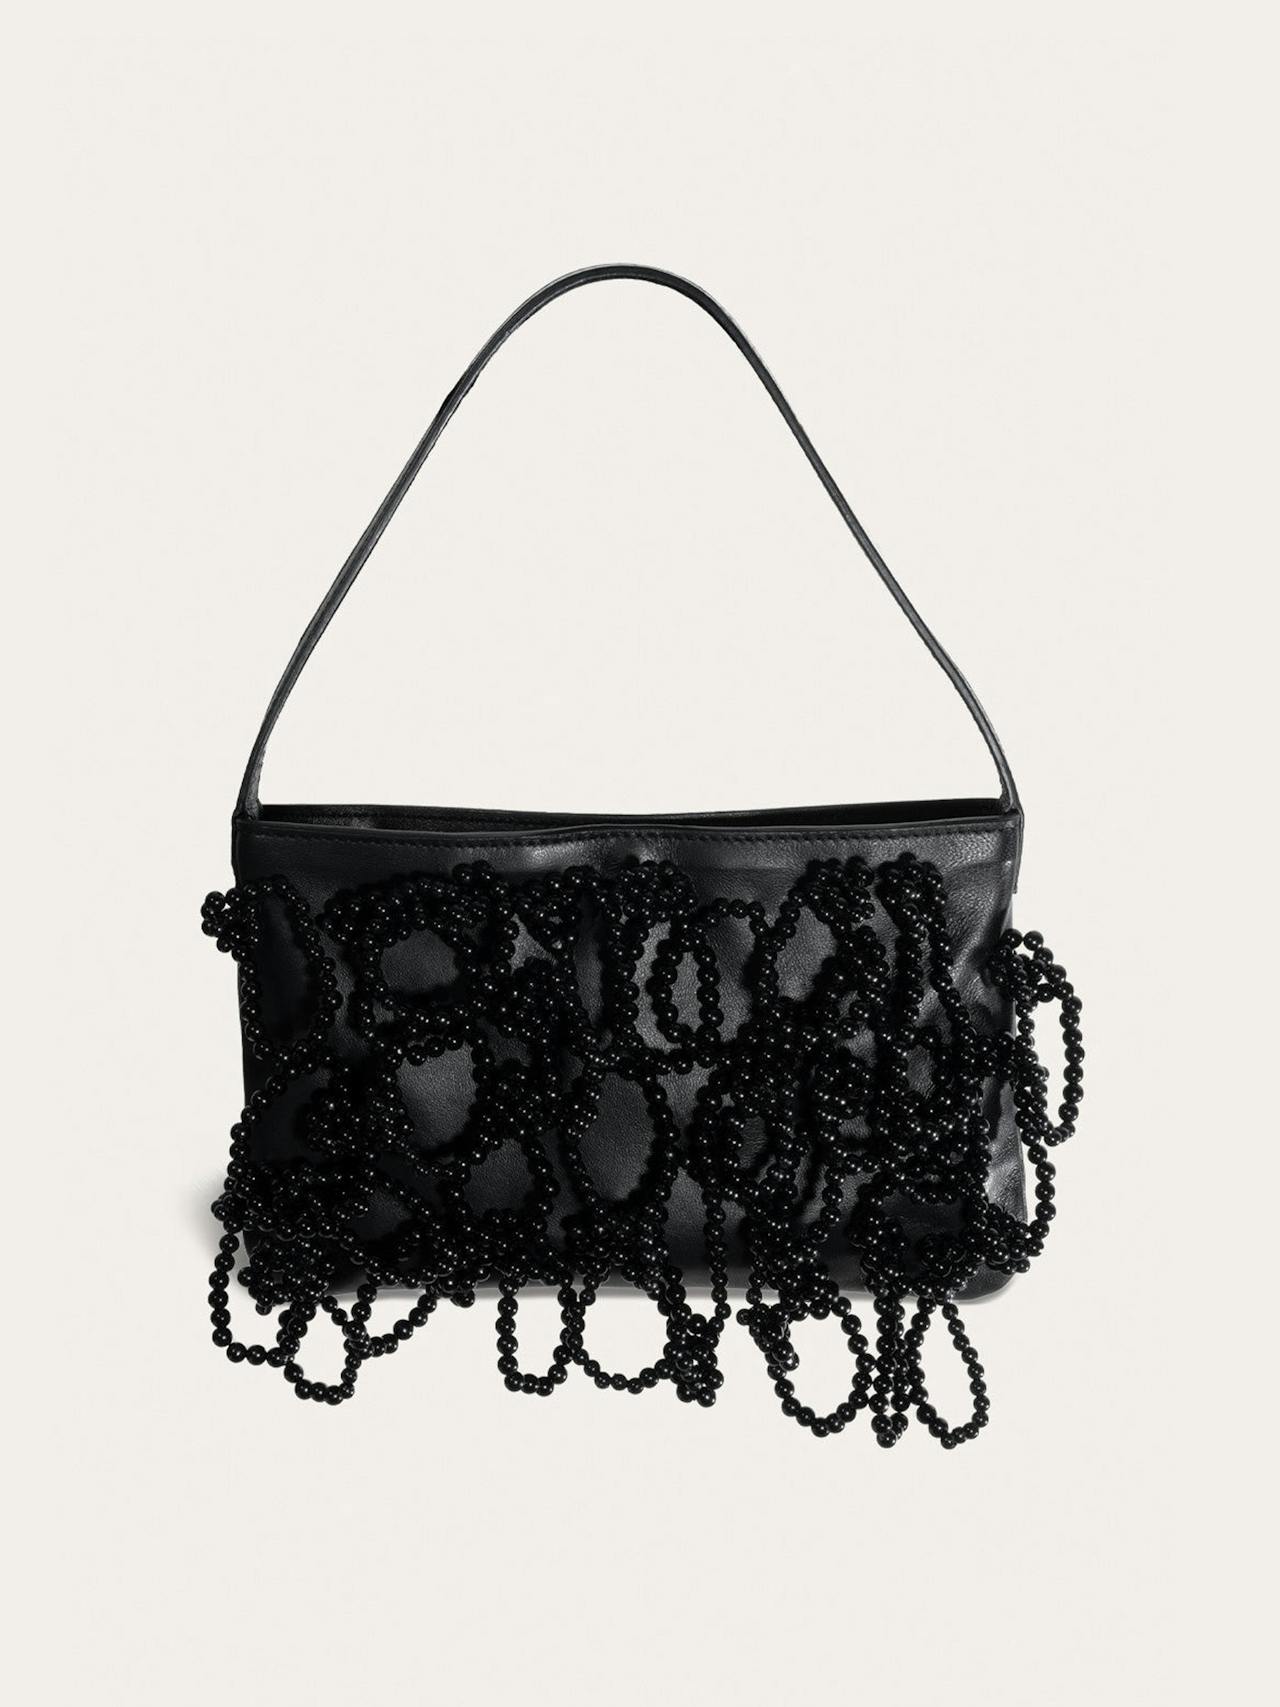 Pearl and black leather handbag